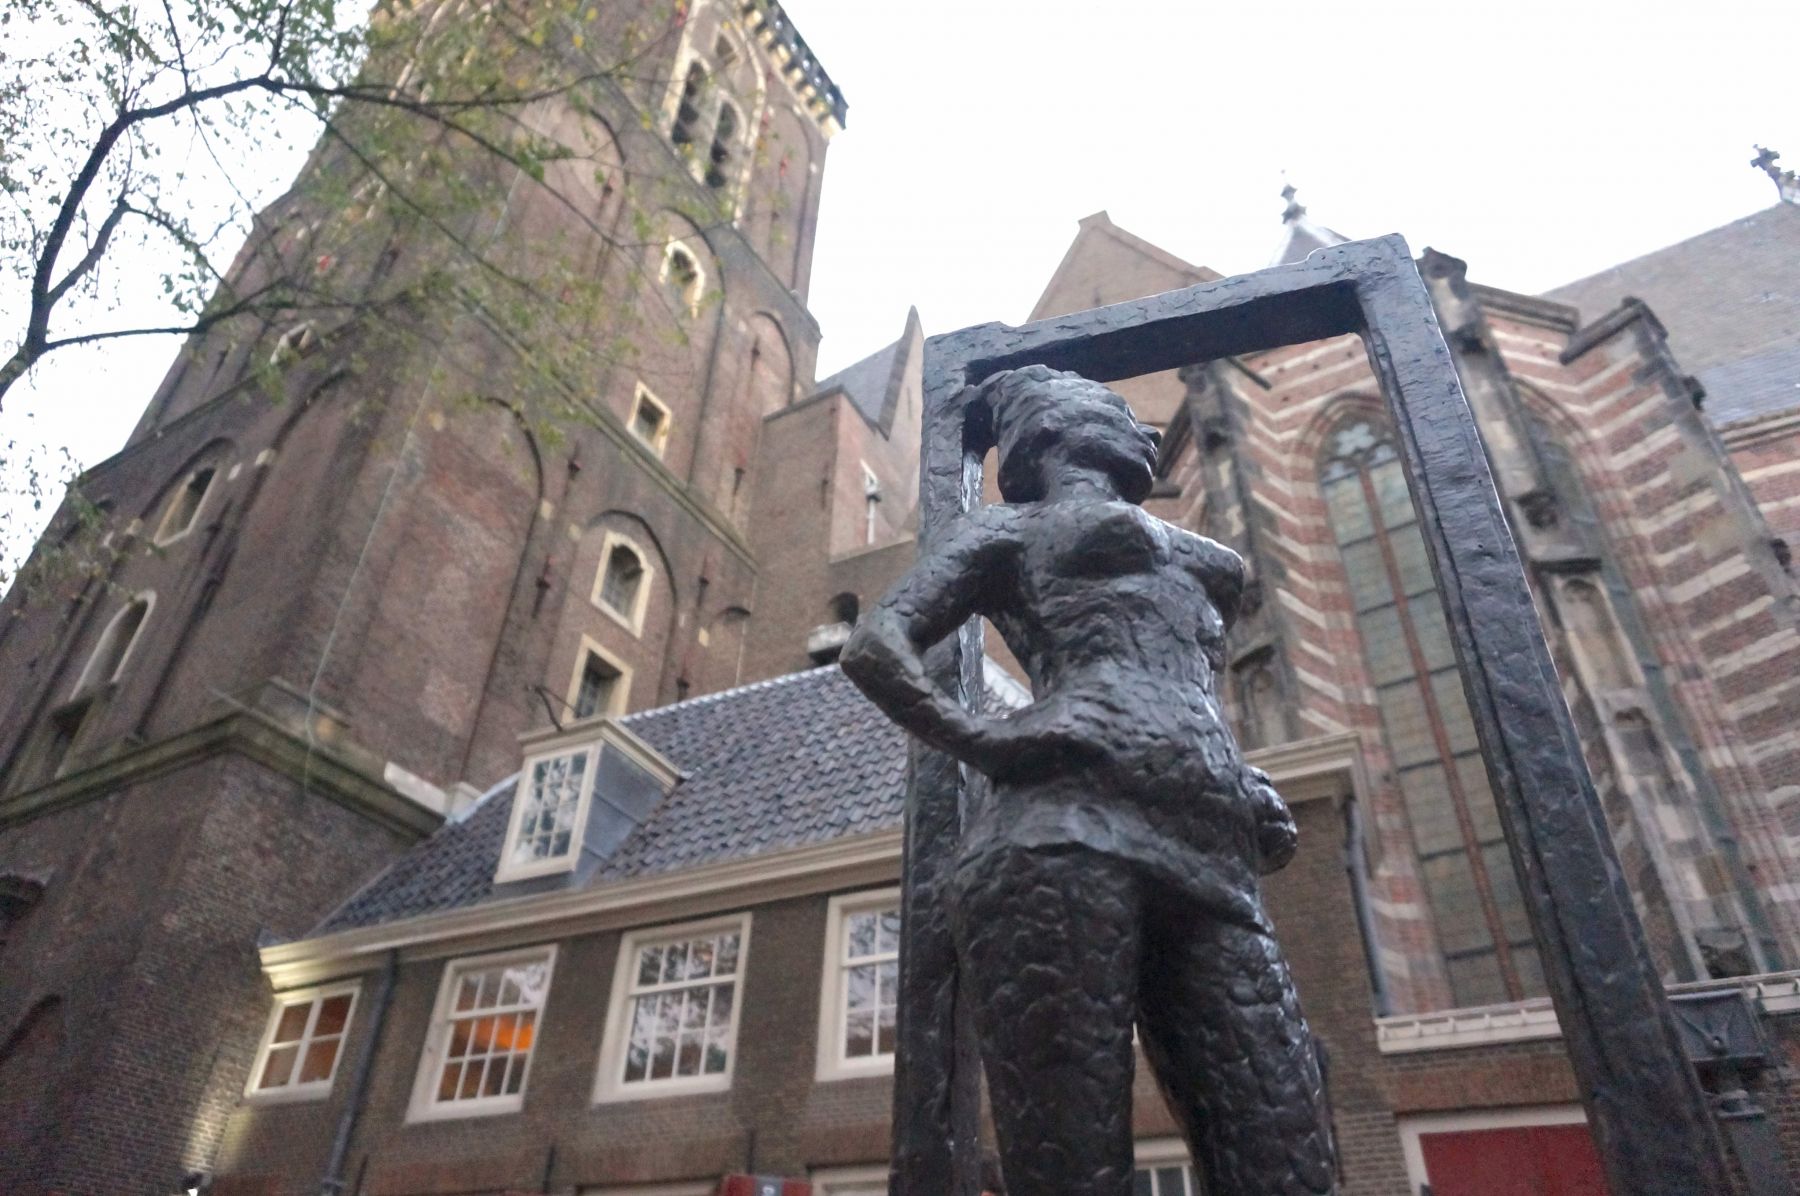 Oude kerk Amsterdam